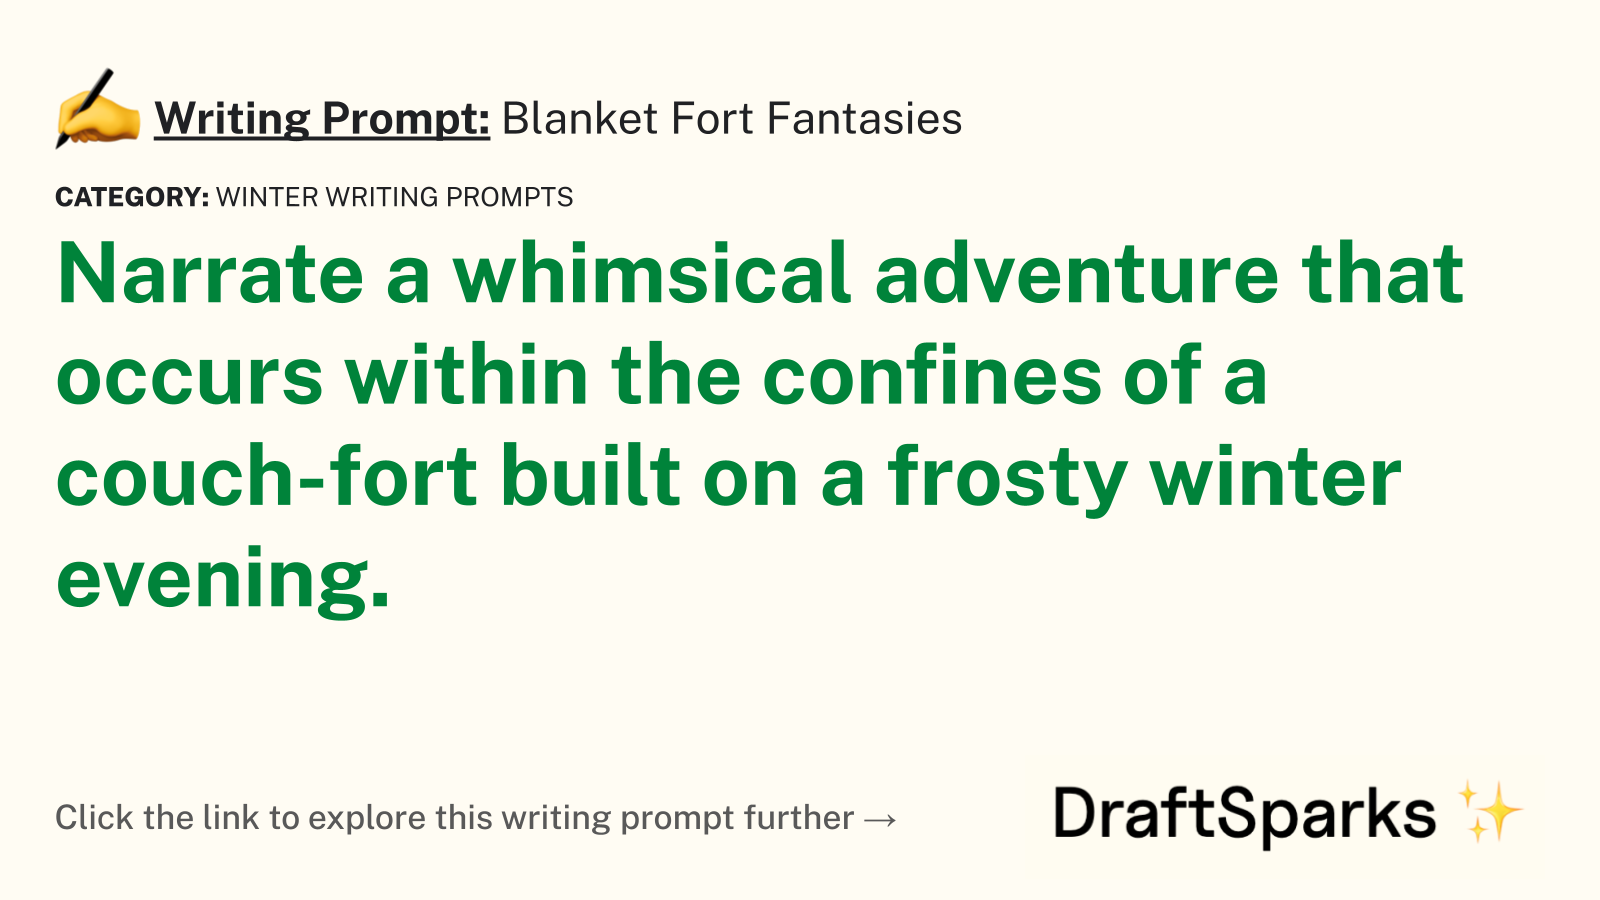 Blanket Fort Fantasies